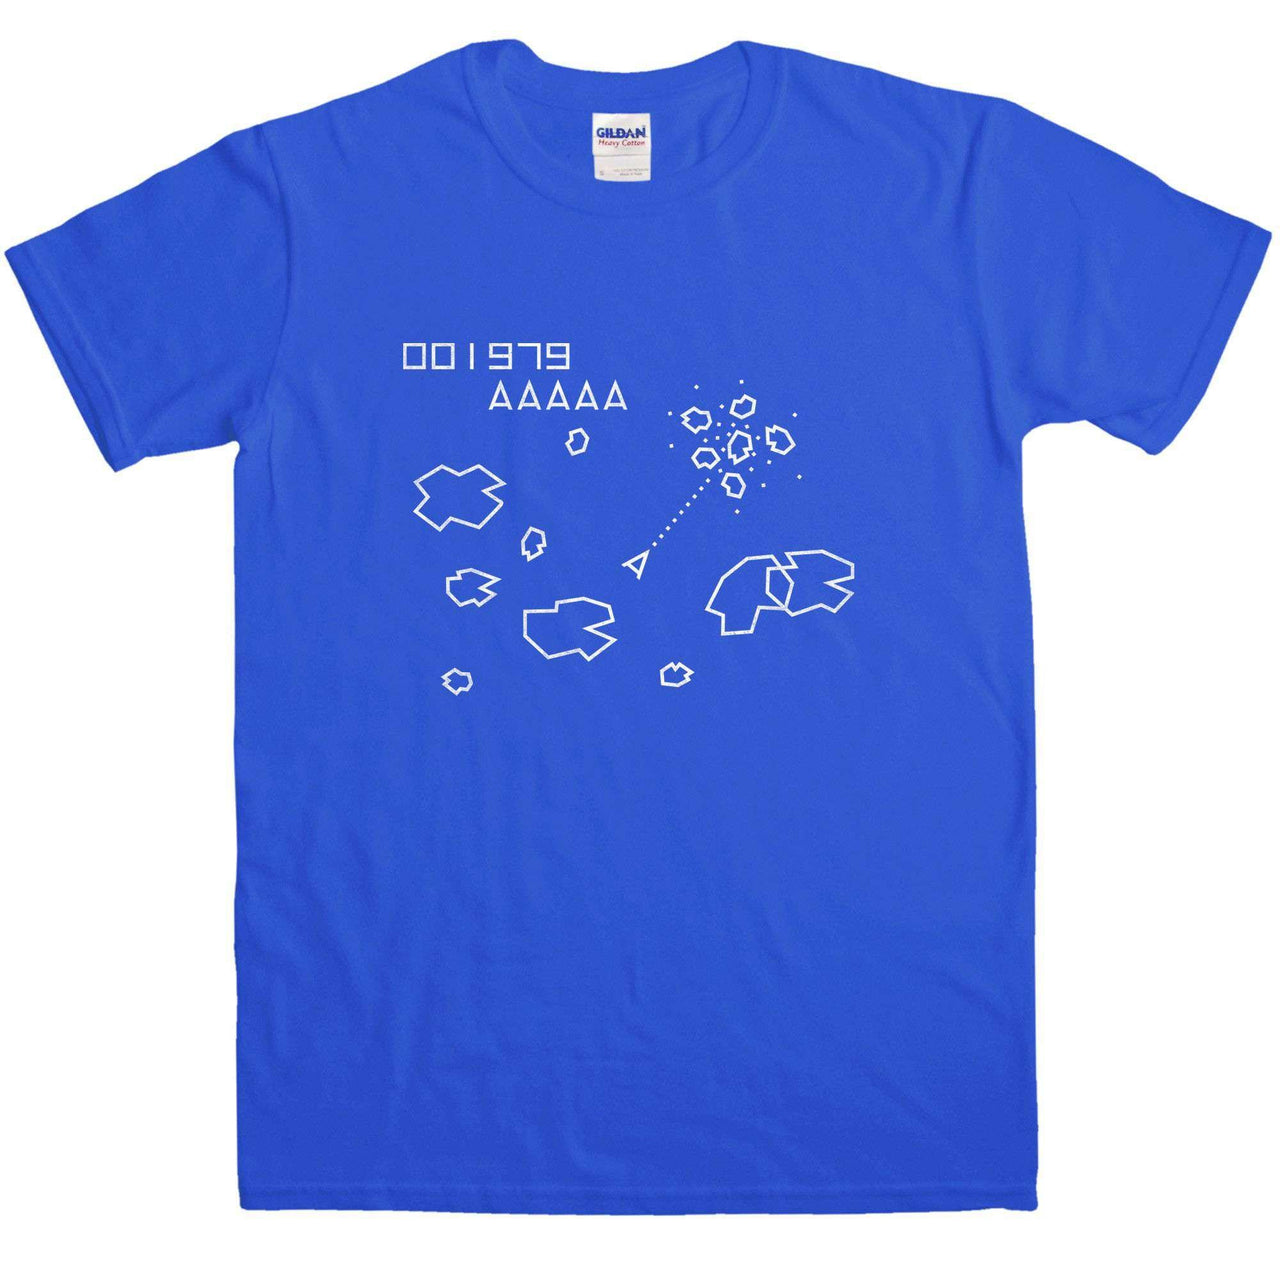 Retro Asteroid T-Shirt For Men 8Ball